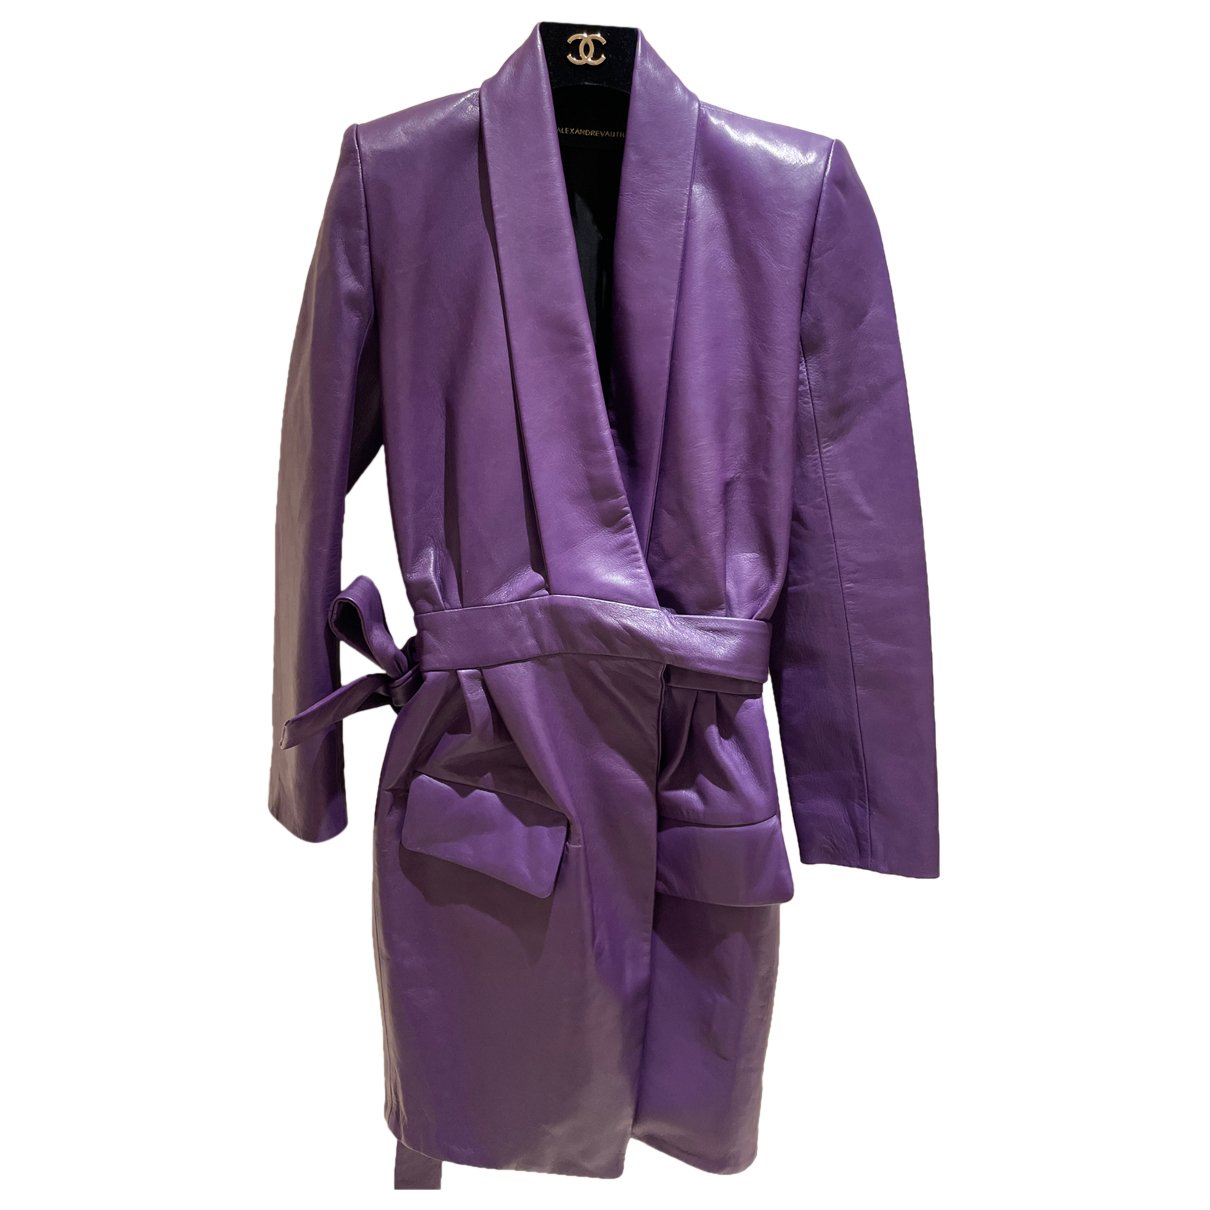 Alexandre Vauthier Leather Mini Dress in Purple.jpg